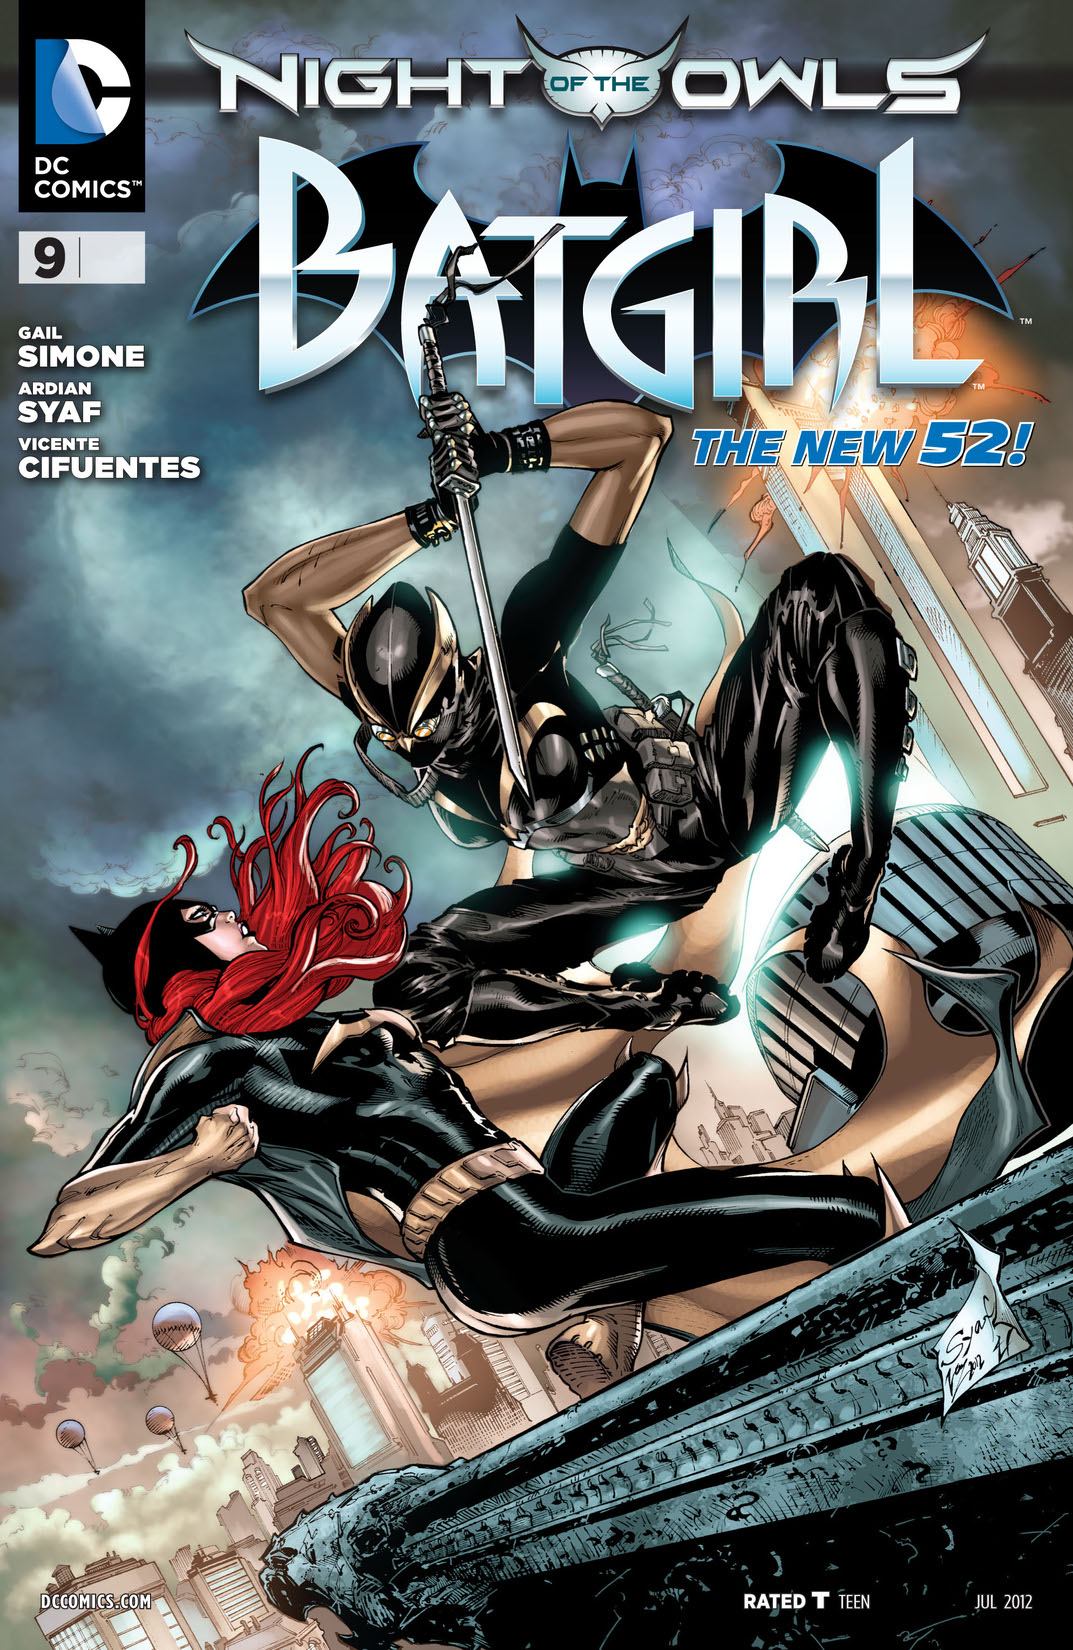 Batgirl (2011-) #9 preview images